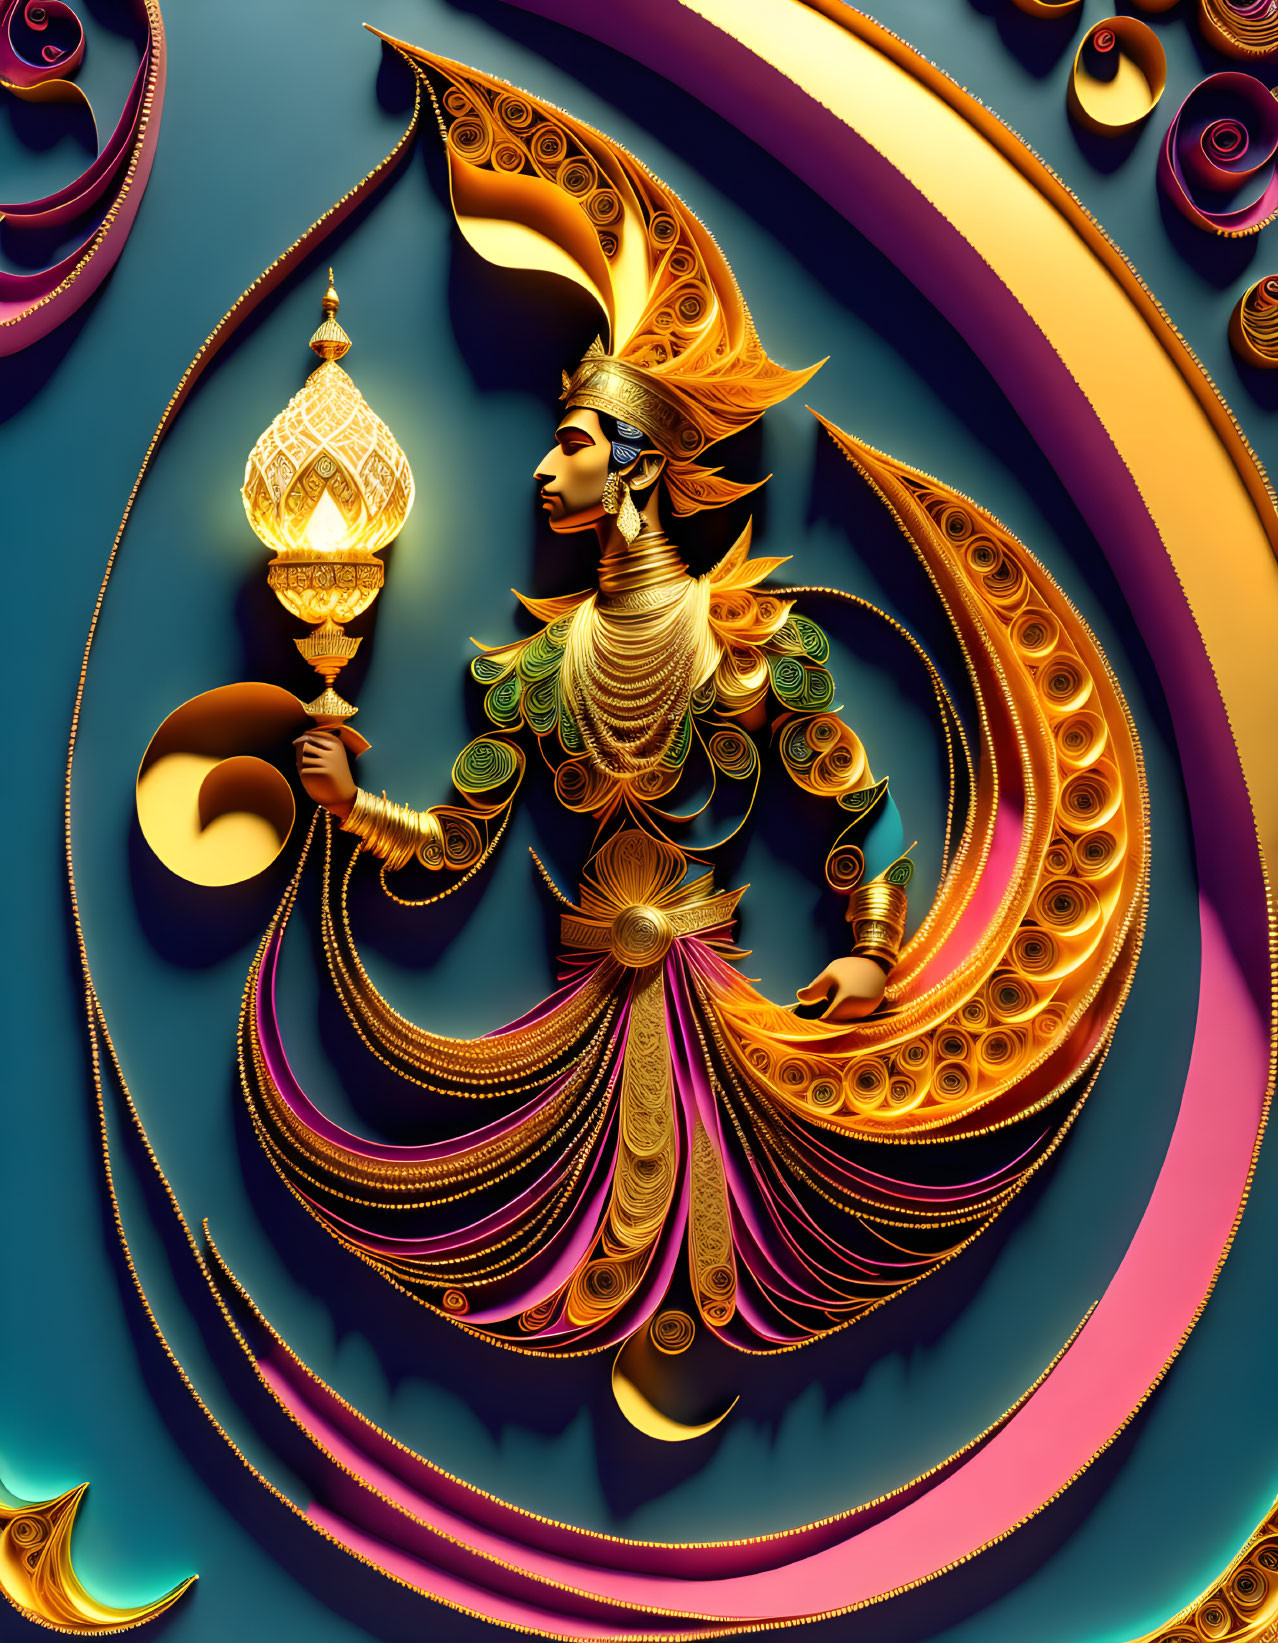 Digital artwork of stylized figure in ornate golden armor against crescent moon.